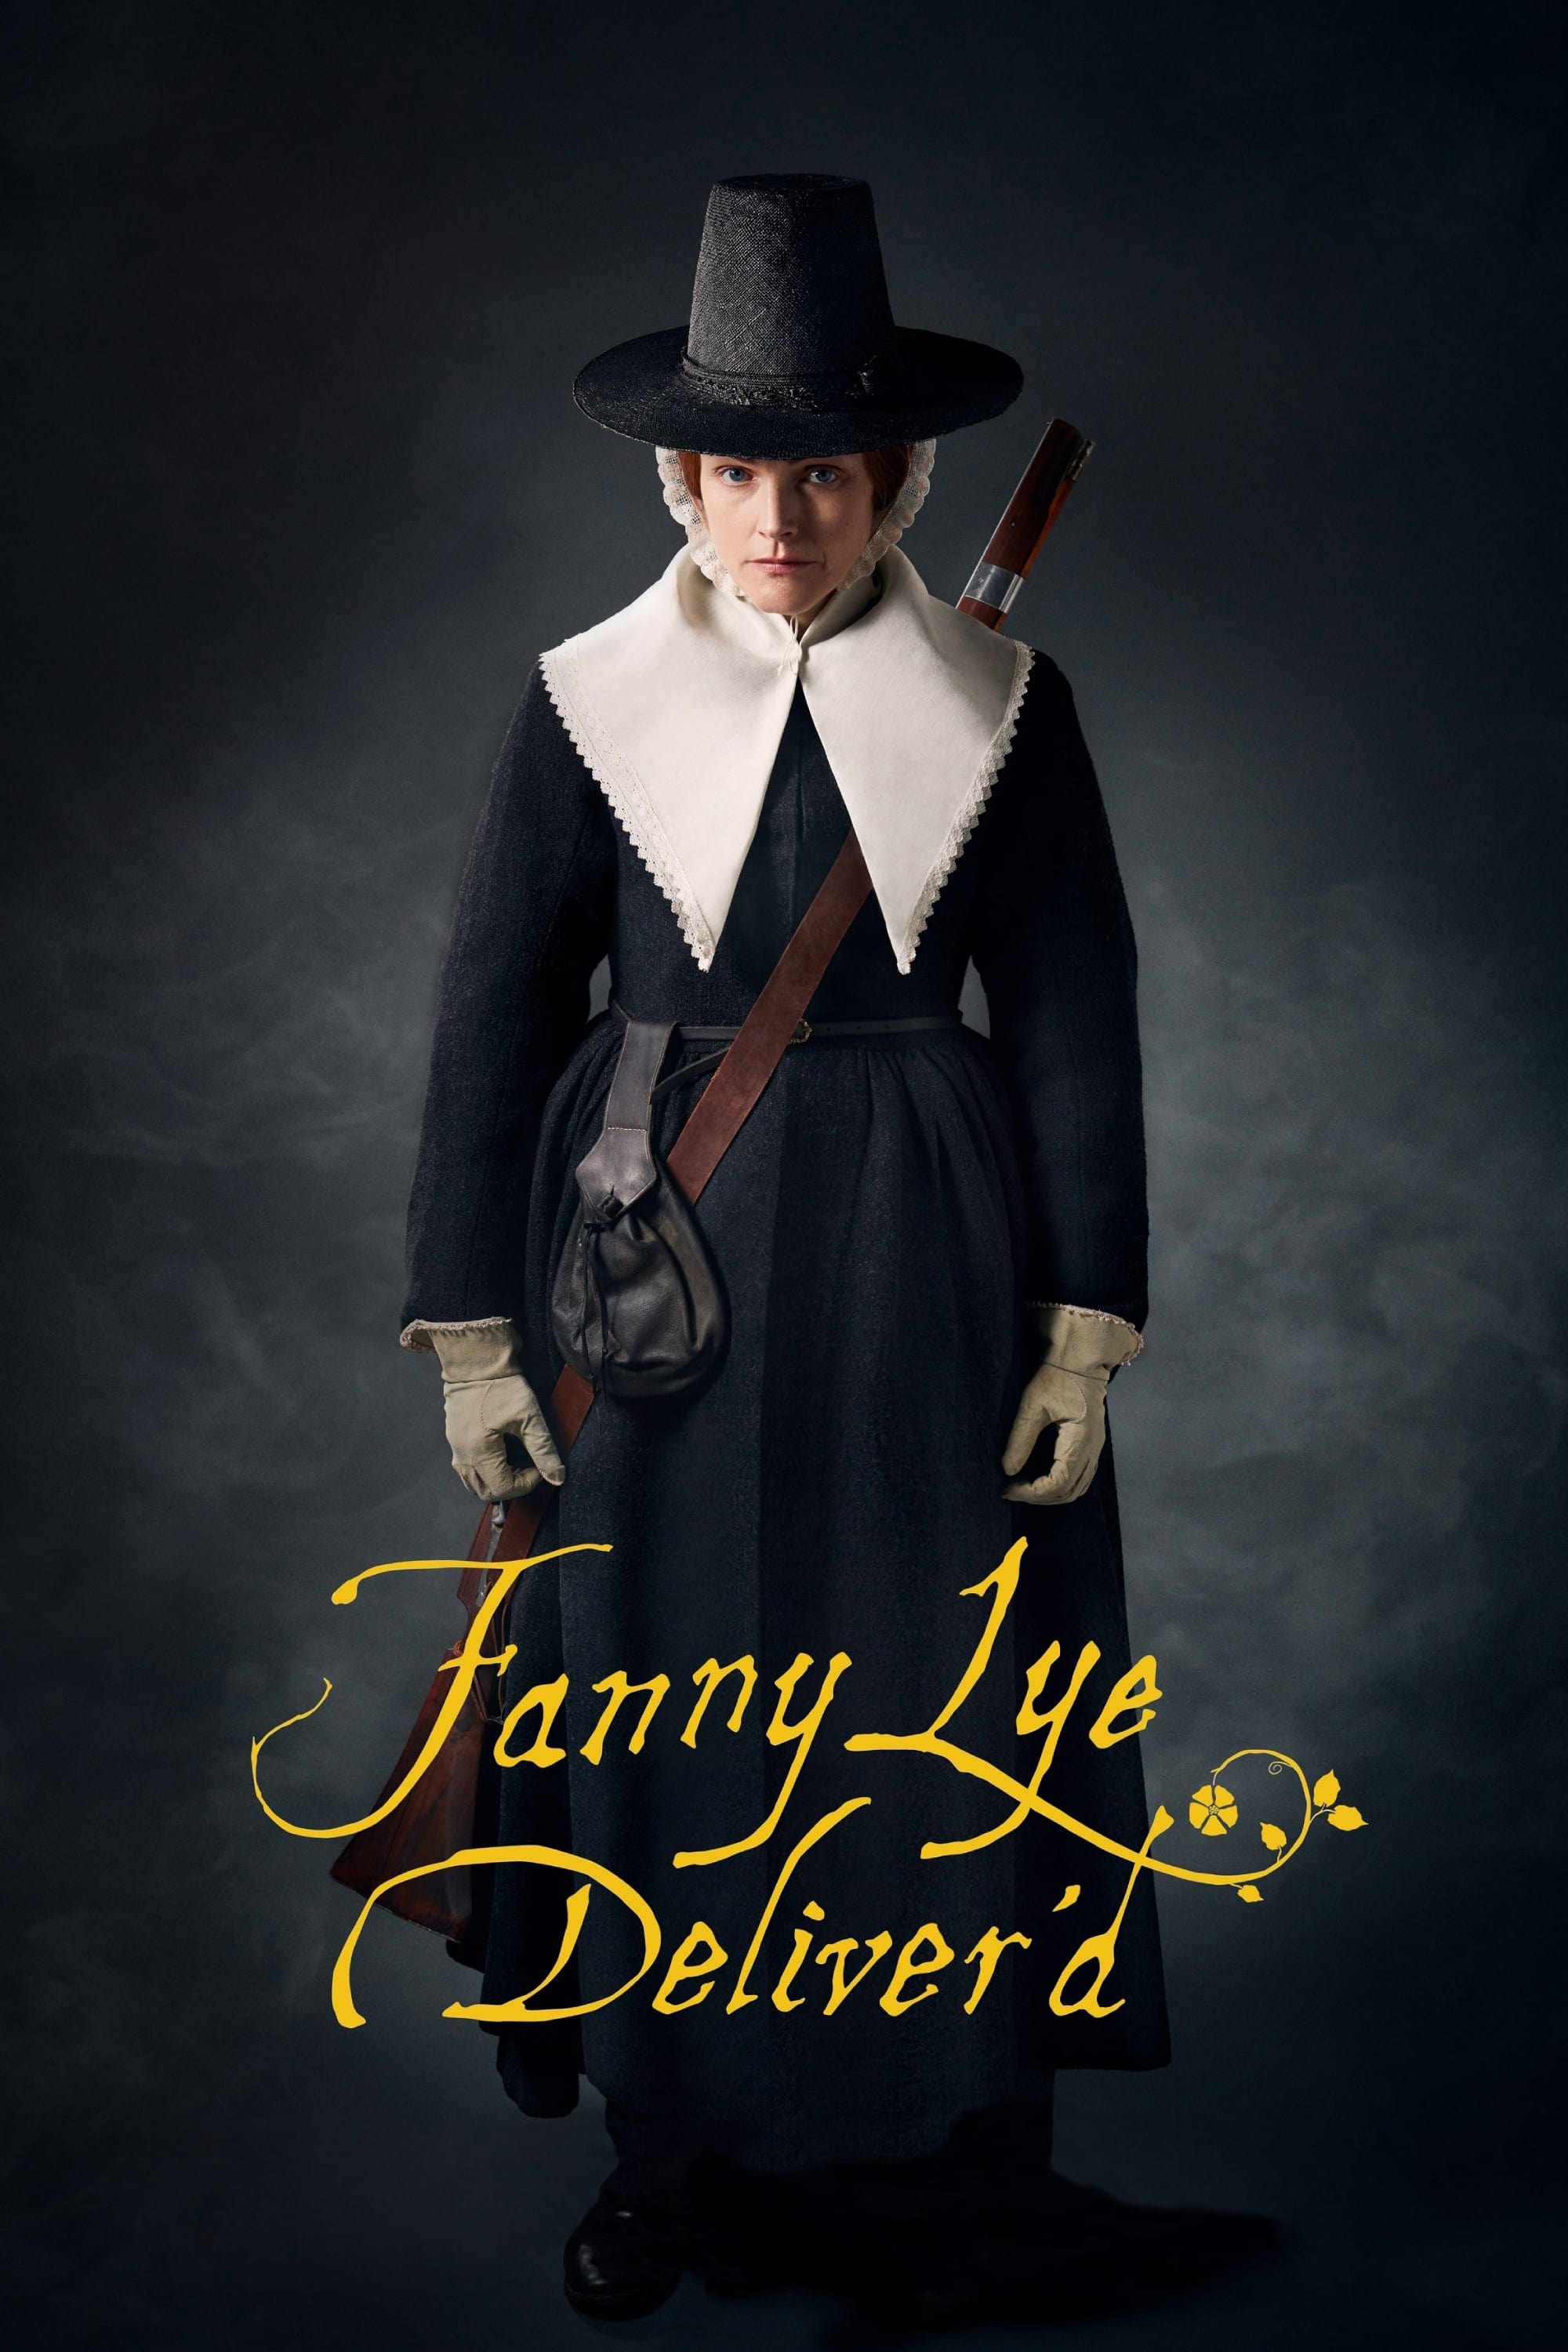 Fanny Lye Deliver'd film